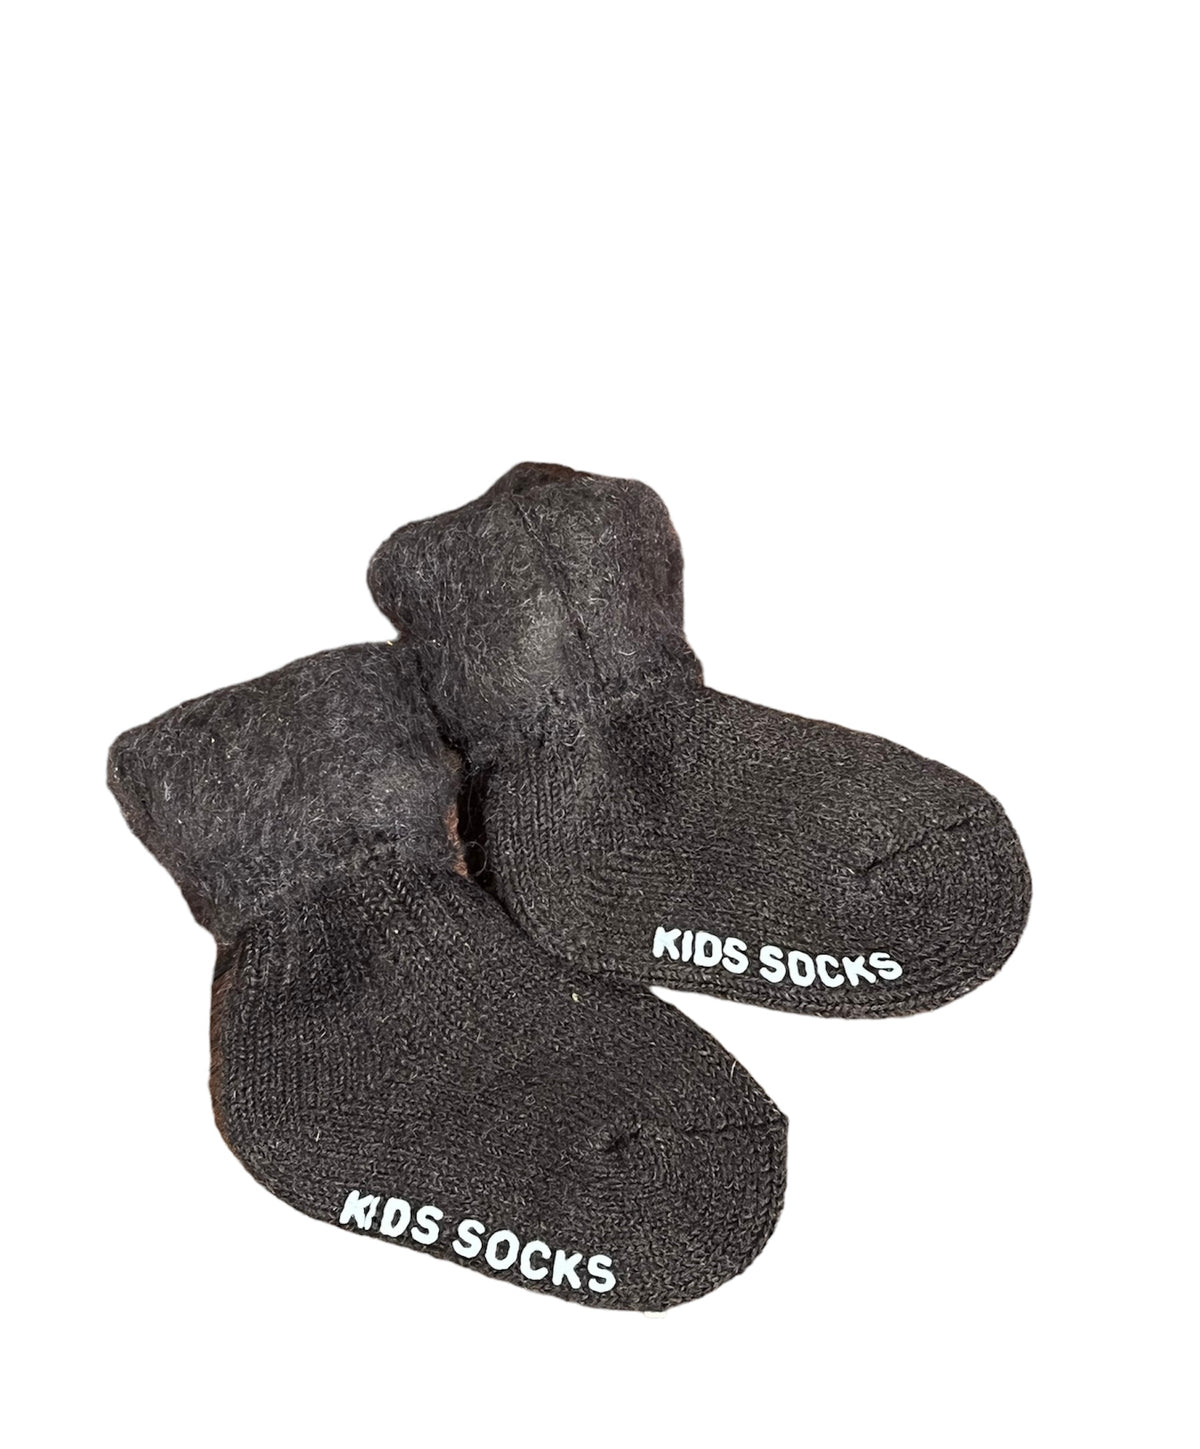 Kids wool socks